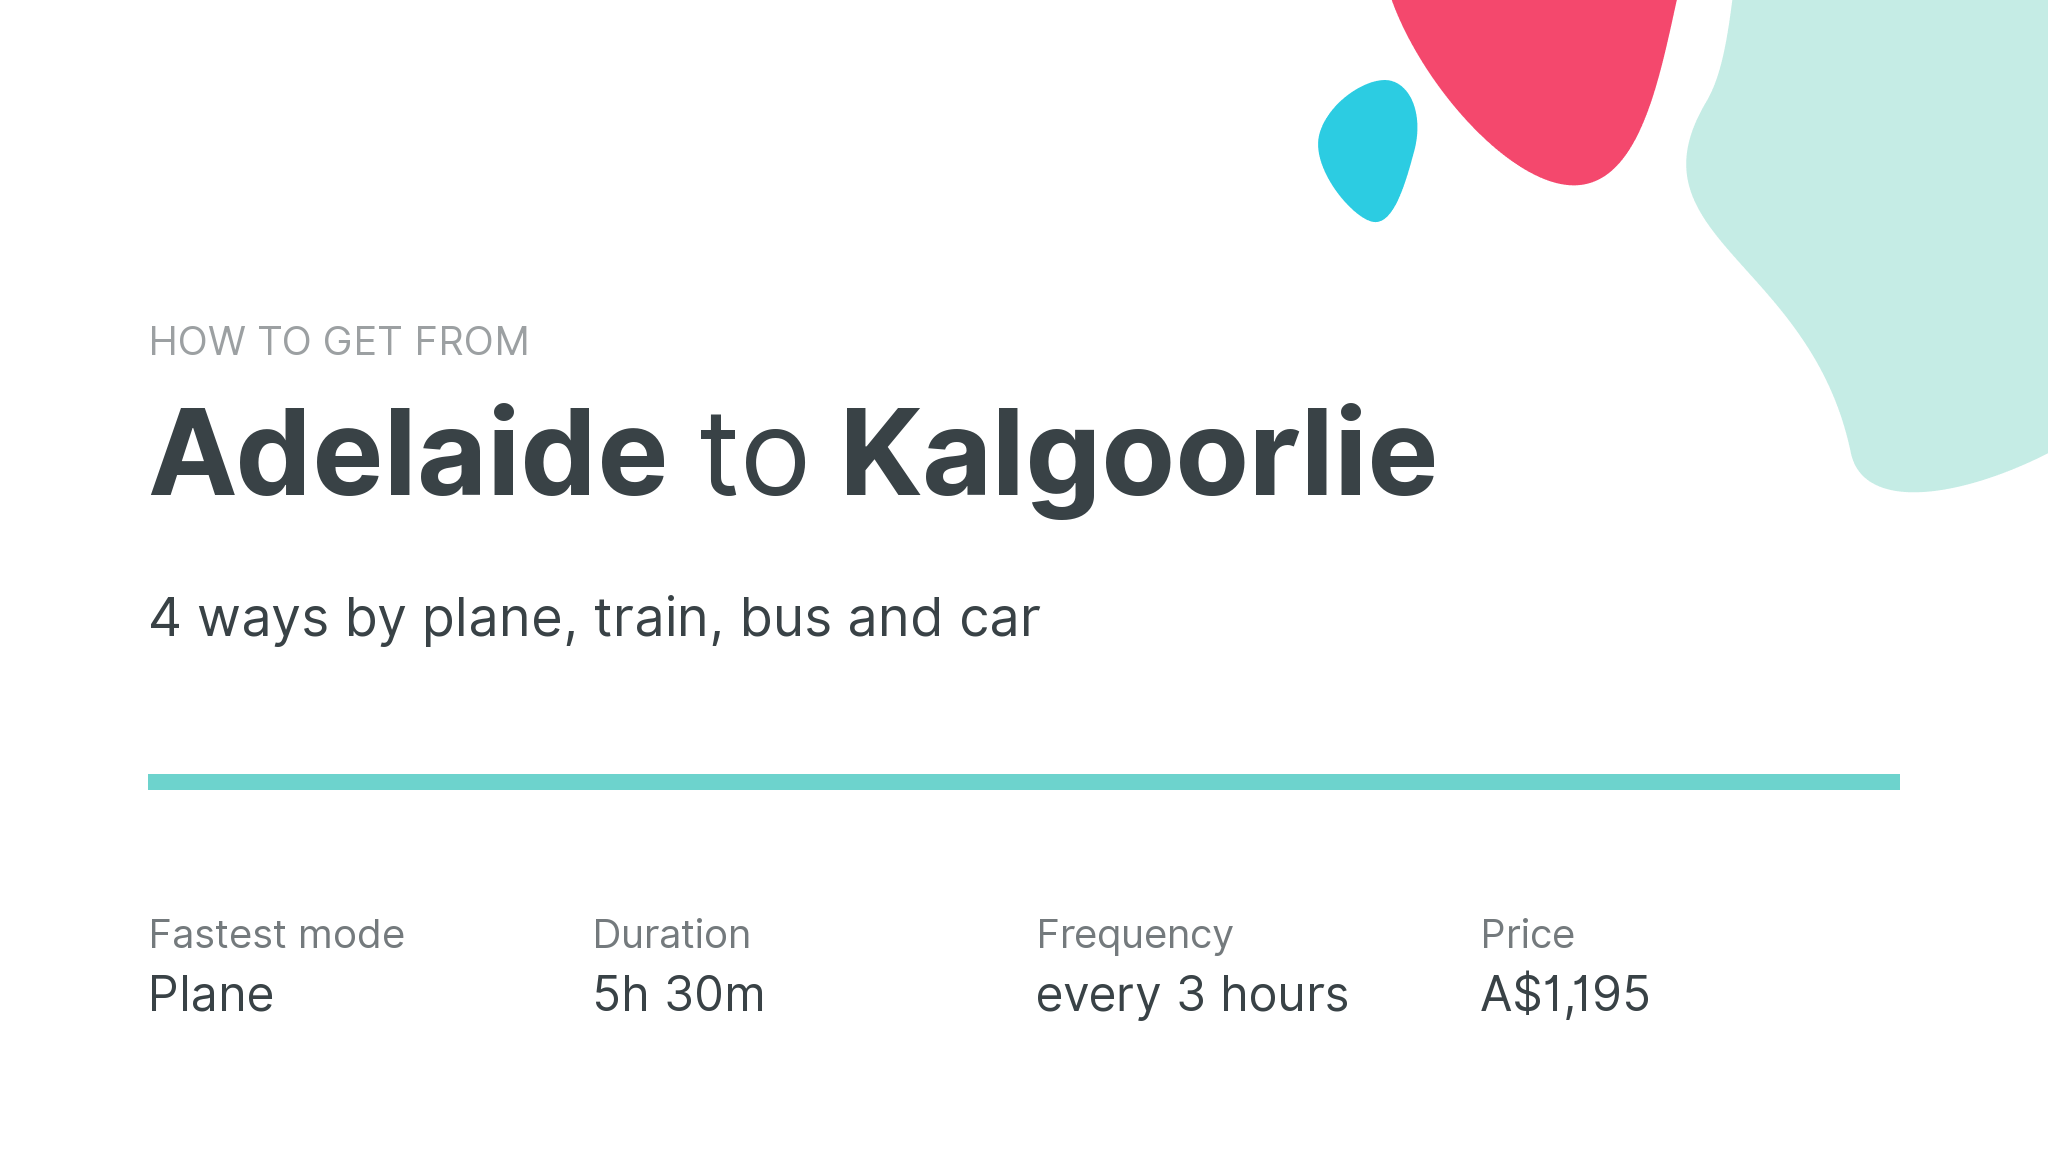 How do I get from Adelaide to Kalgoorlie